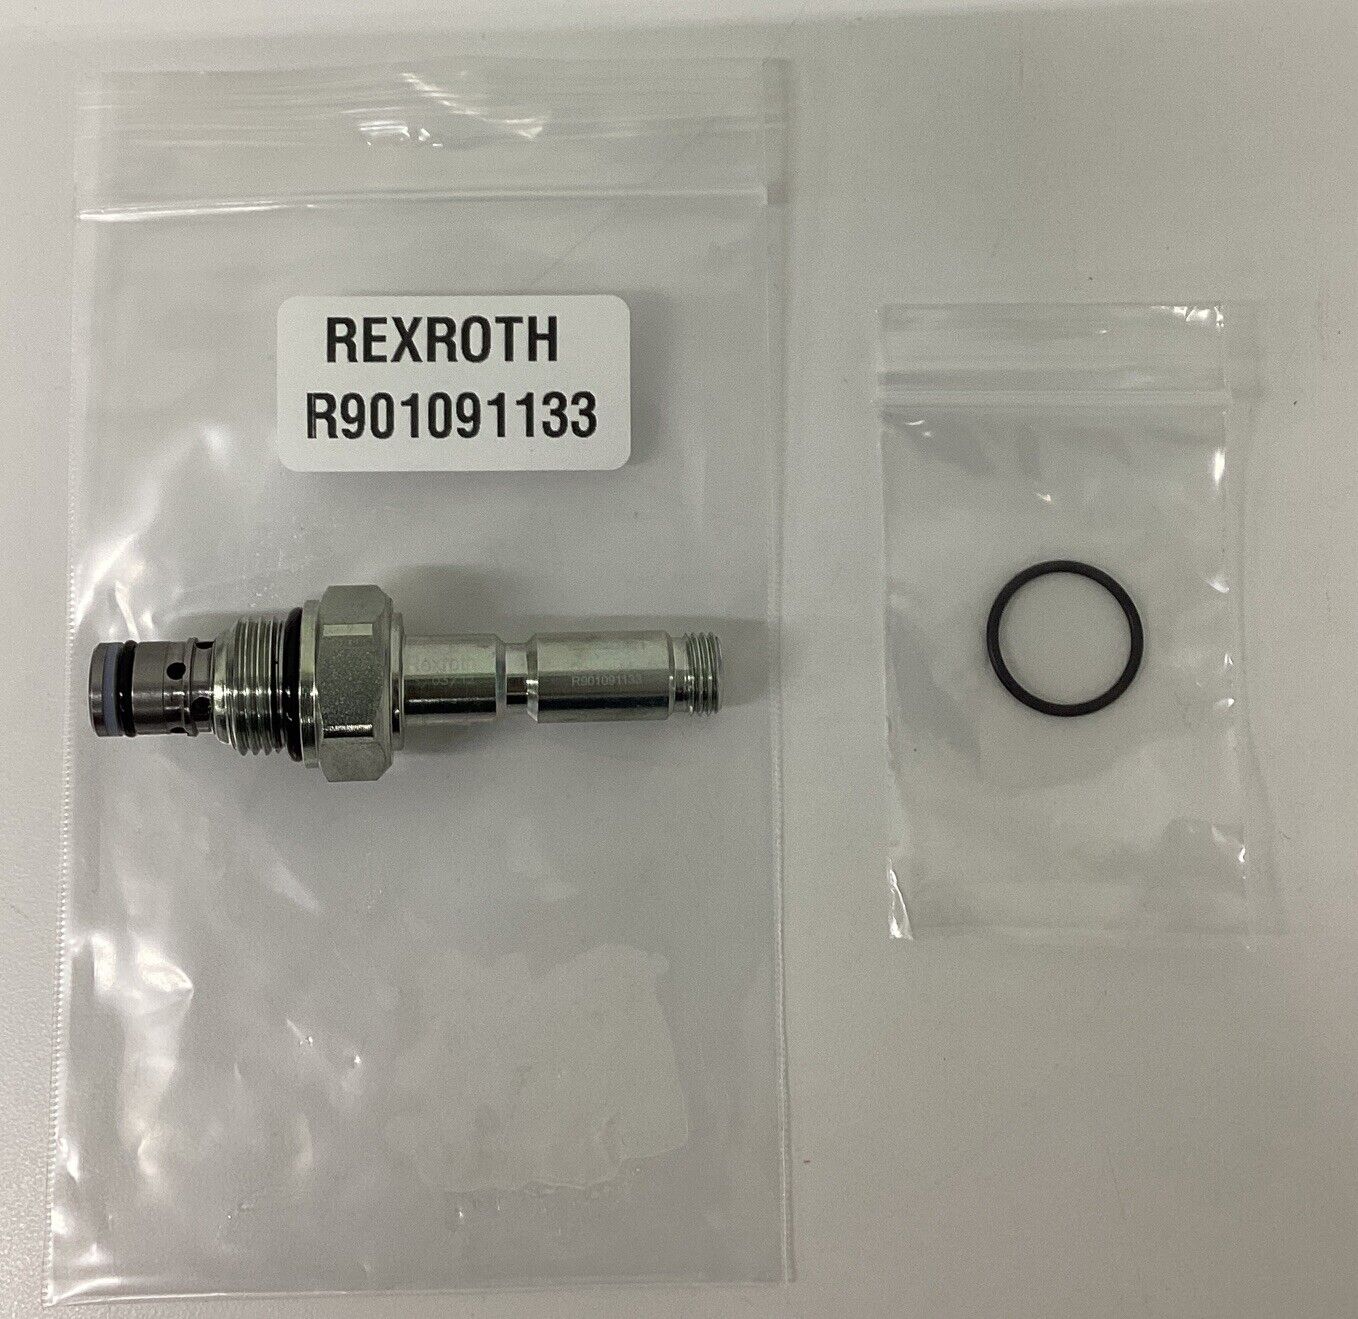 Rexroth Bosch R901091133 Solenoid Operated 2-way Hydraulic Valve (GR144) - 0